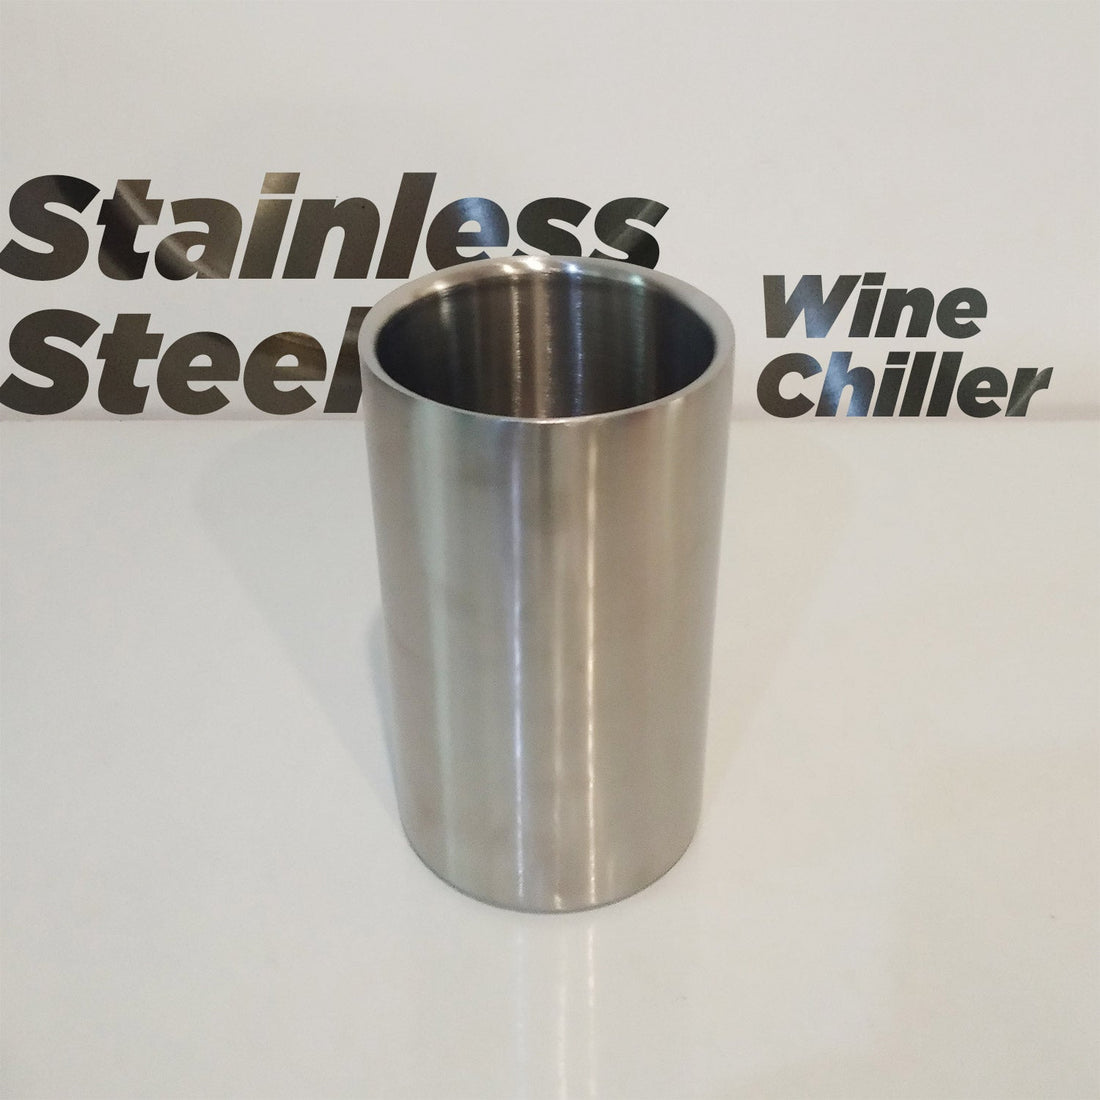 Stainless Steel Wine Chiller